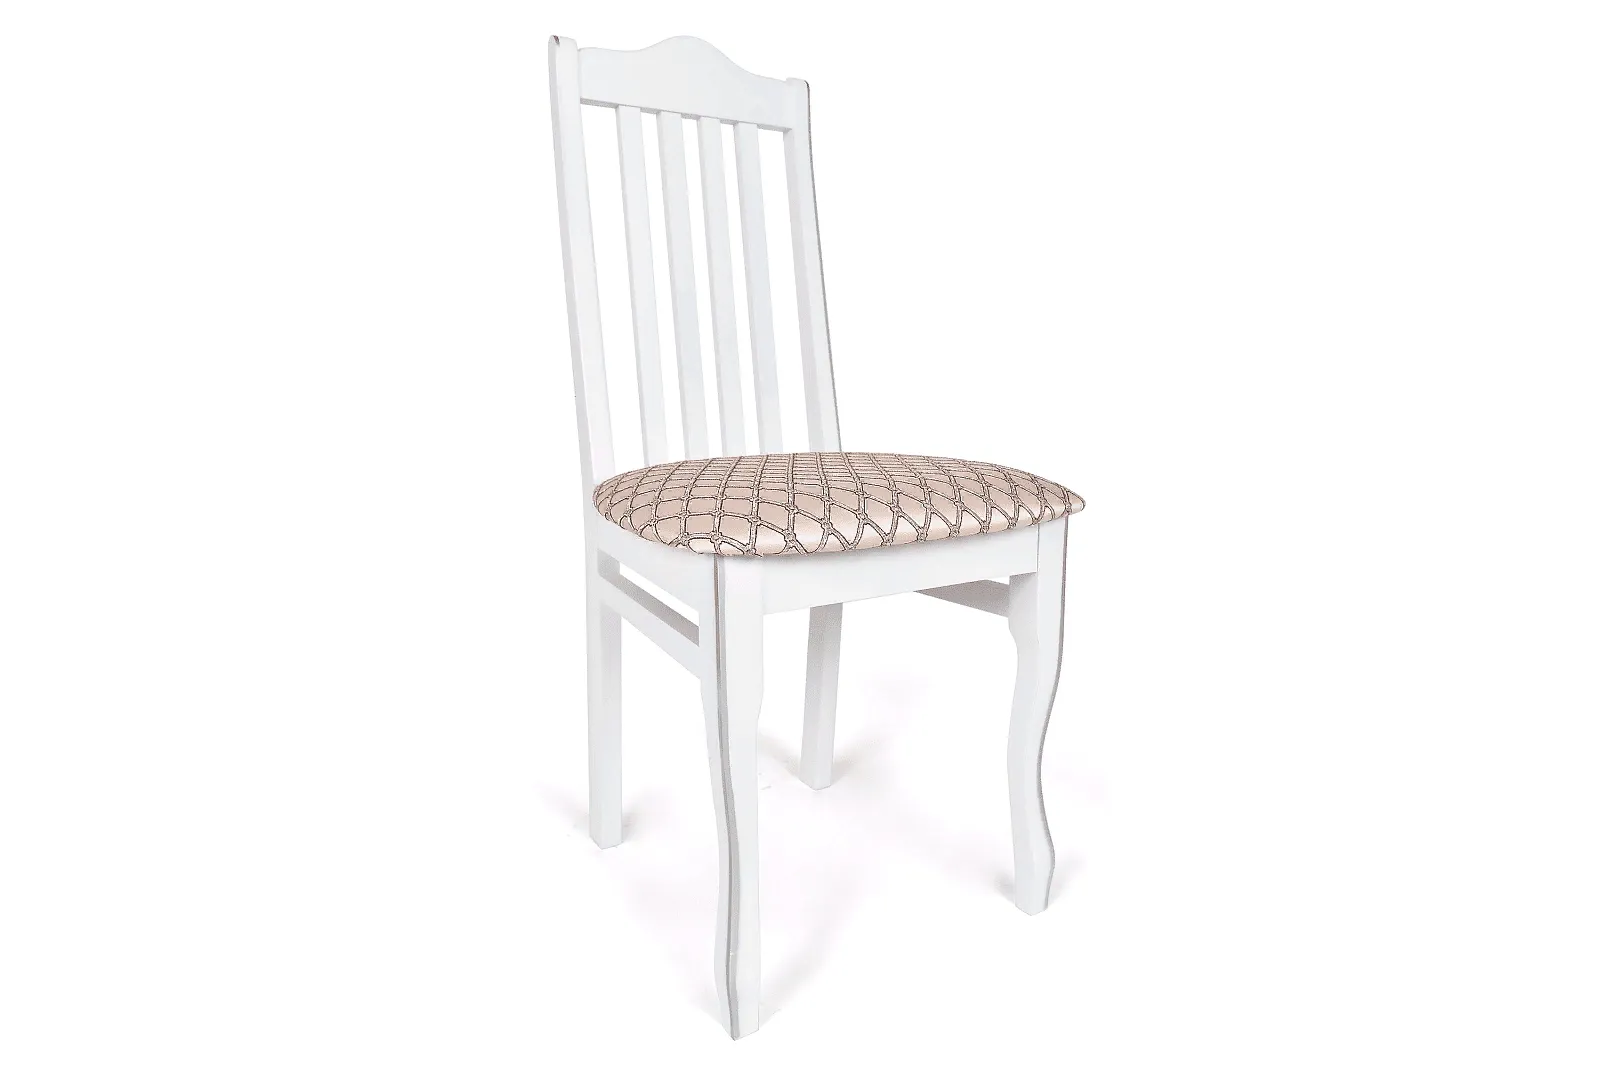 АРОМАТ 106 стул (белый с серебром)